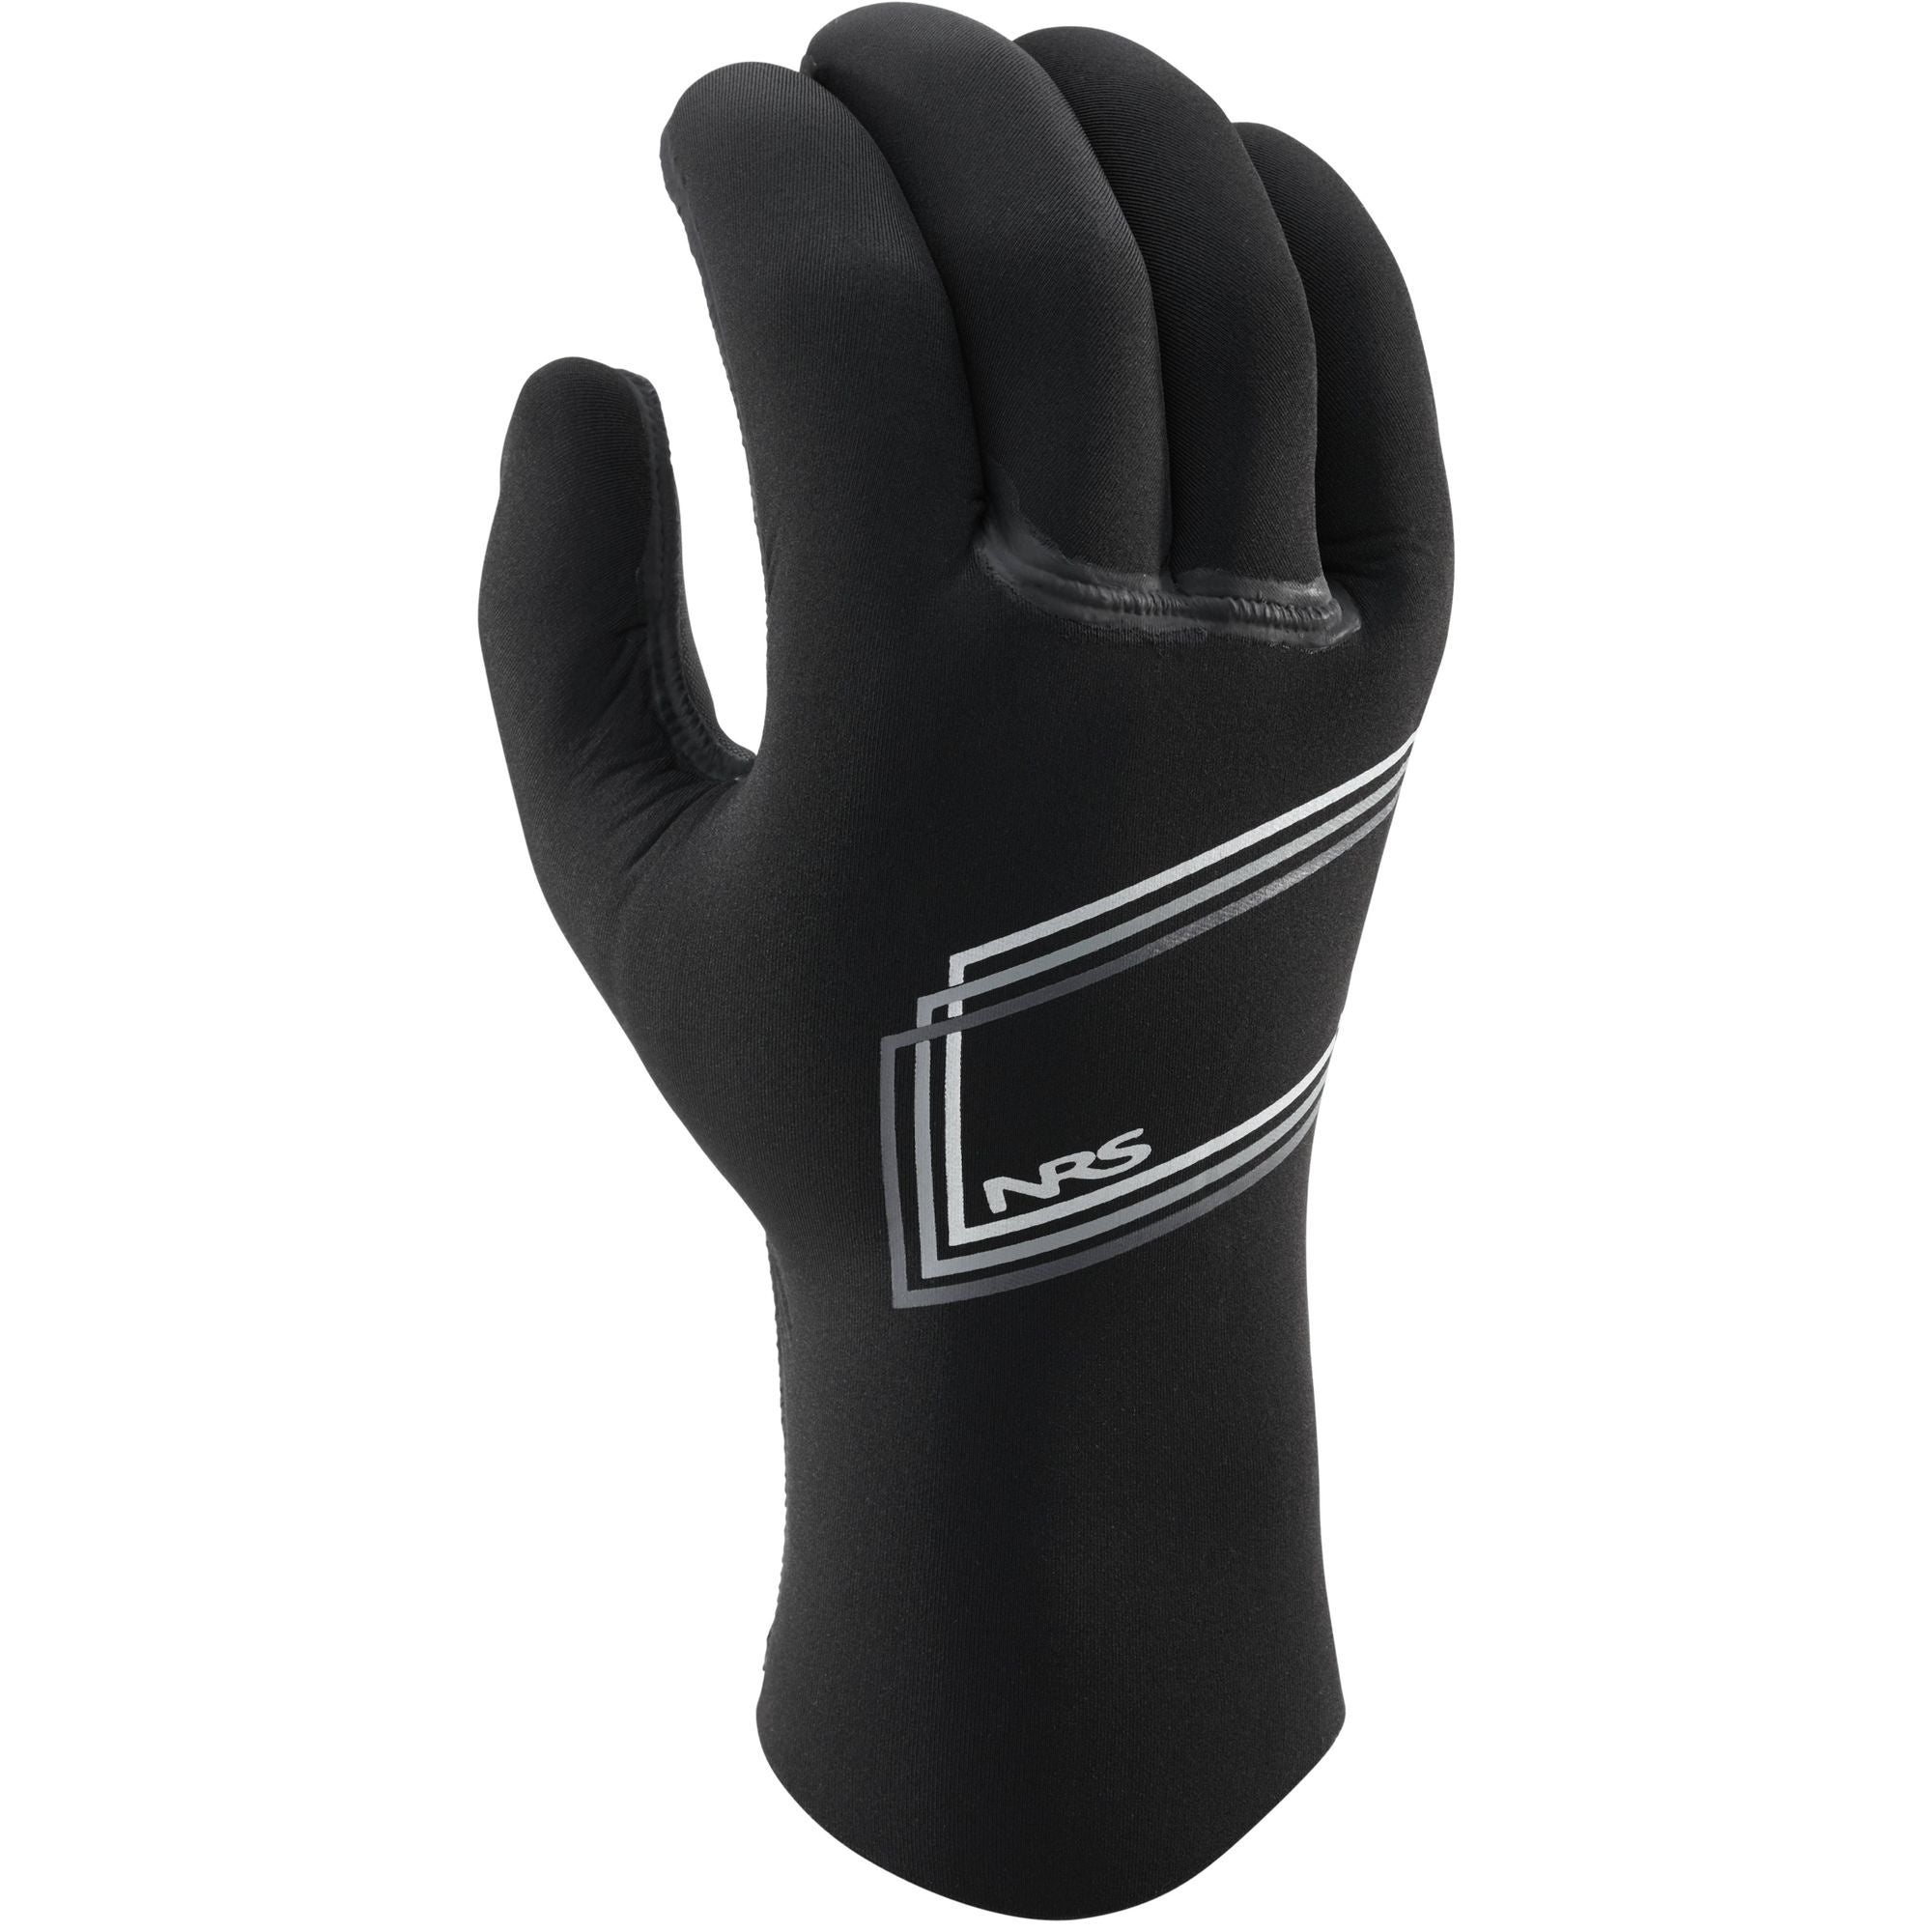 NRS - Maxim Glove